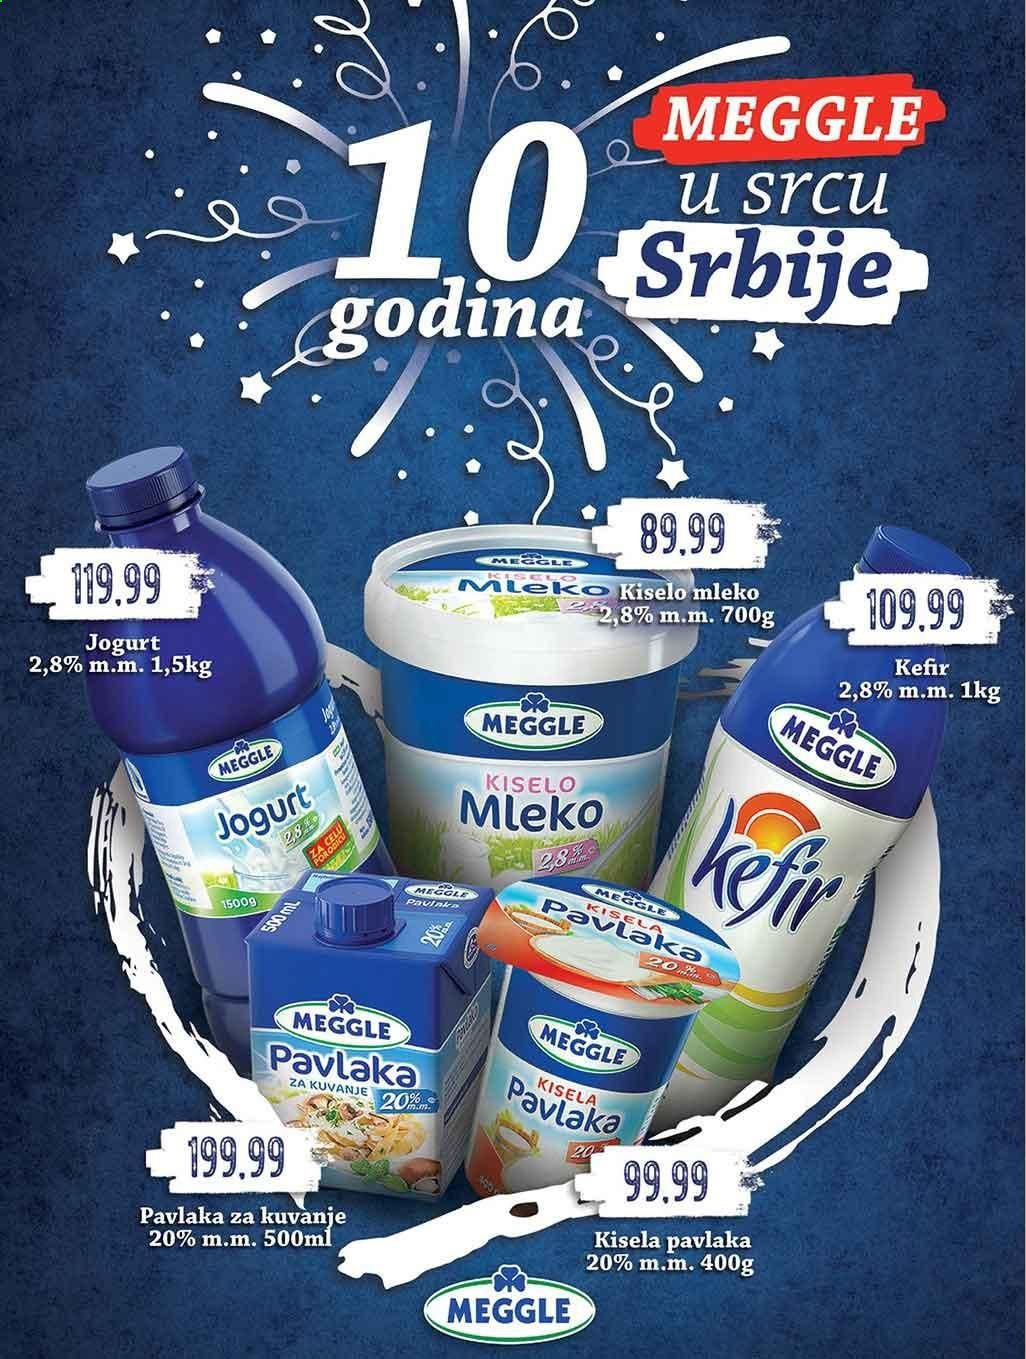 thumbnail - Gomex katalog - 07.05.2021 - 20.05.2021 - Proizvodi na akciji - Meggle, jogurt, kefir, kiselo mleko, mleko, kisela pavlaka, pavlaka. Stranica 2.